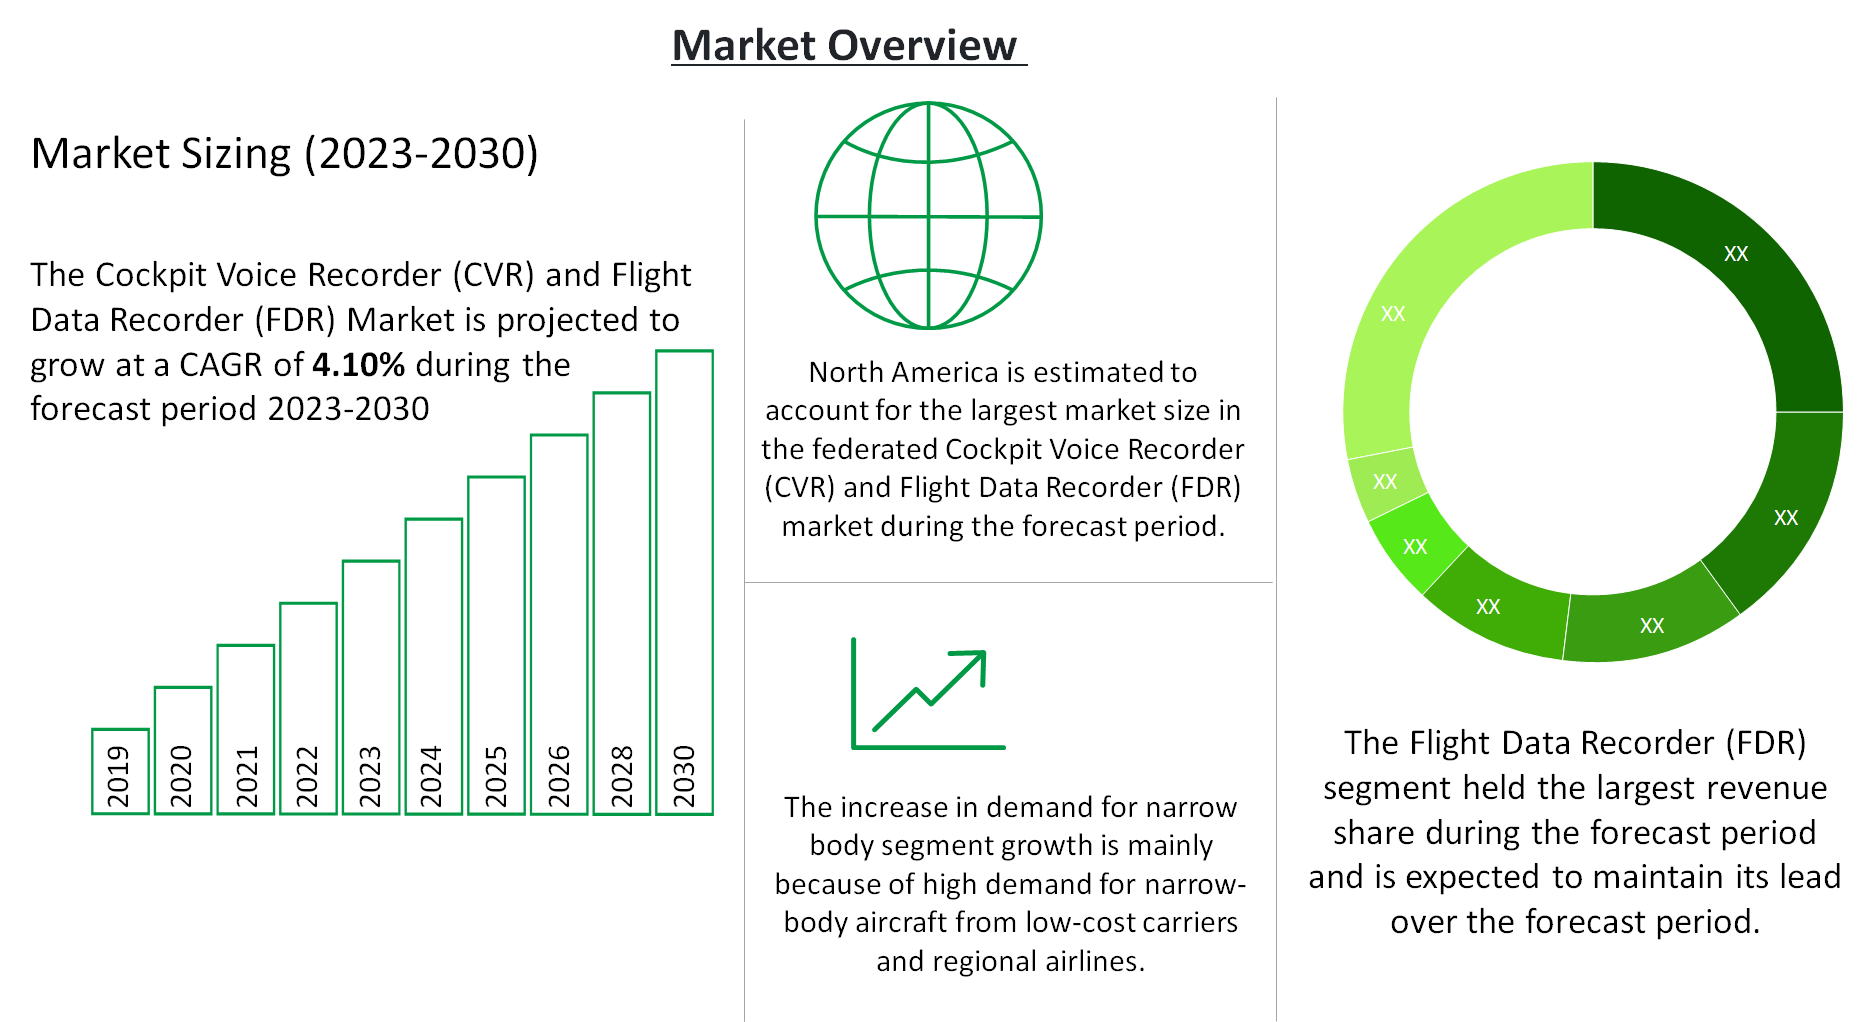 Cockpit Voice Recorder (CVR) and Flight Data Recorder (FDR) Market by